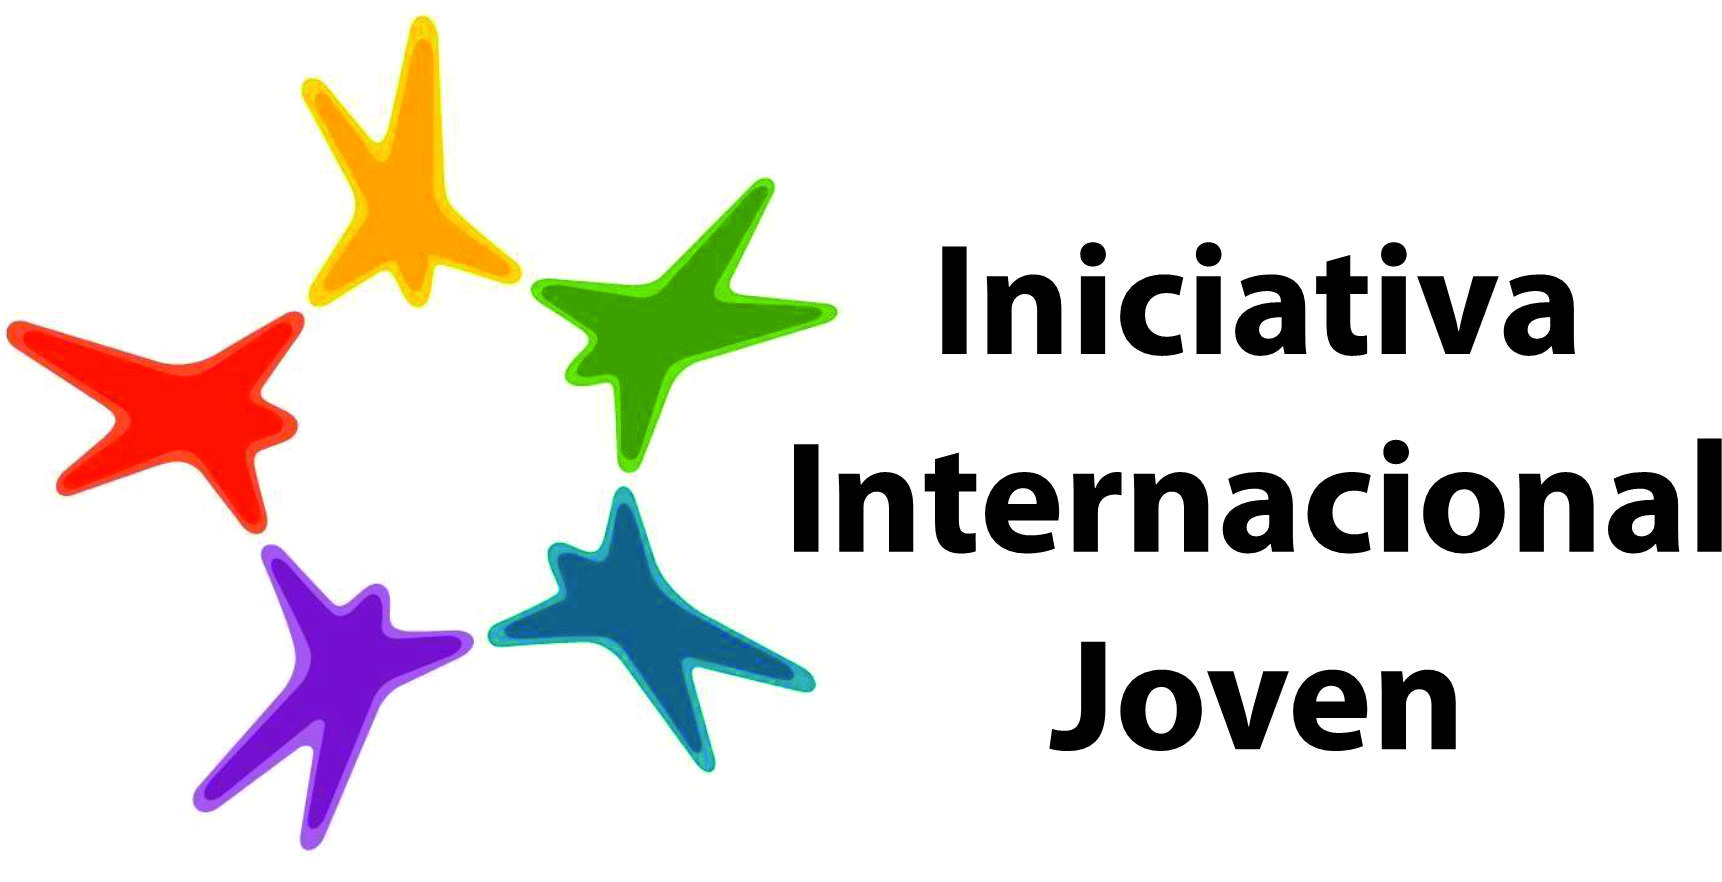 Iniciativa Internacional Joven